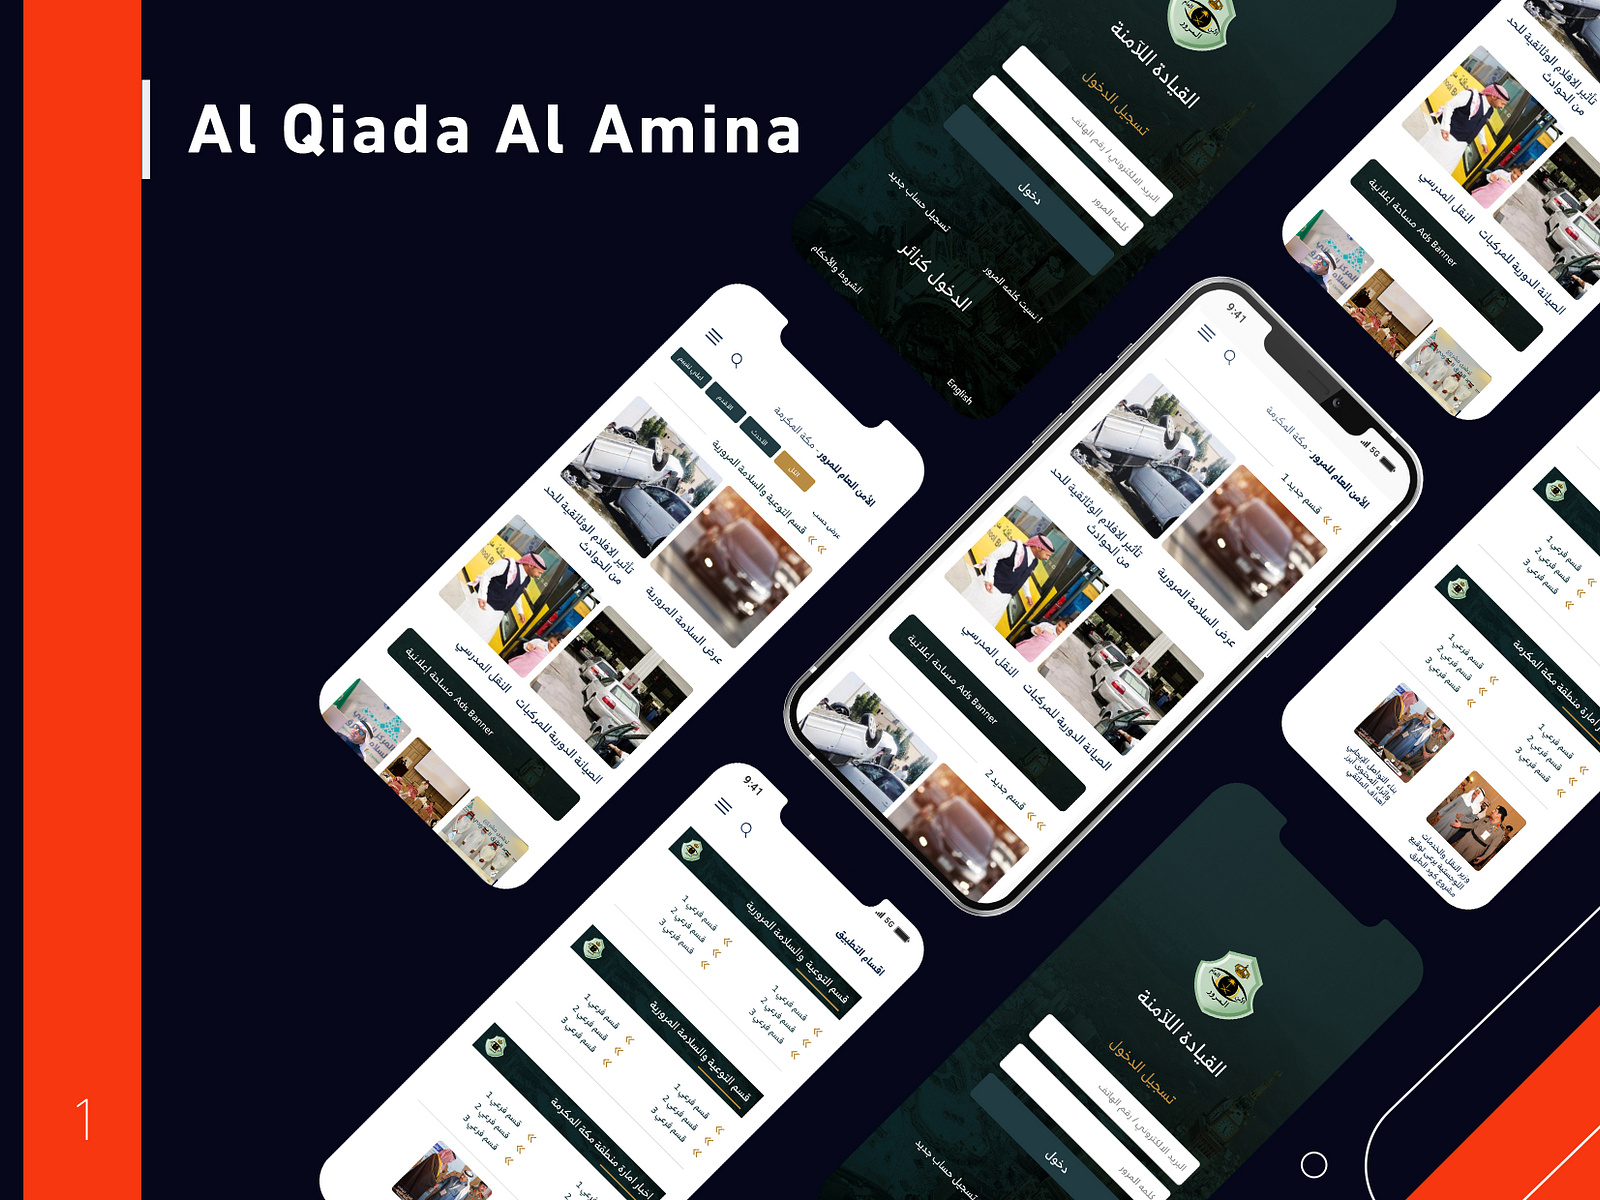 Al Qiada Al-Amina App [Unofficial] by Abdelrahman Mahmoud on Dribbble